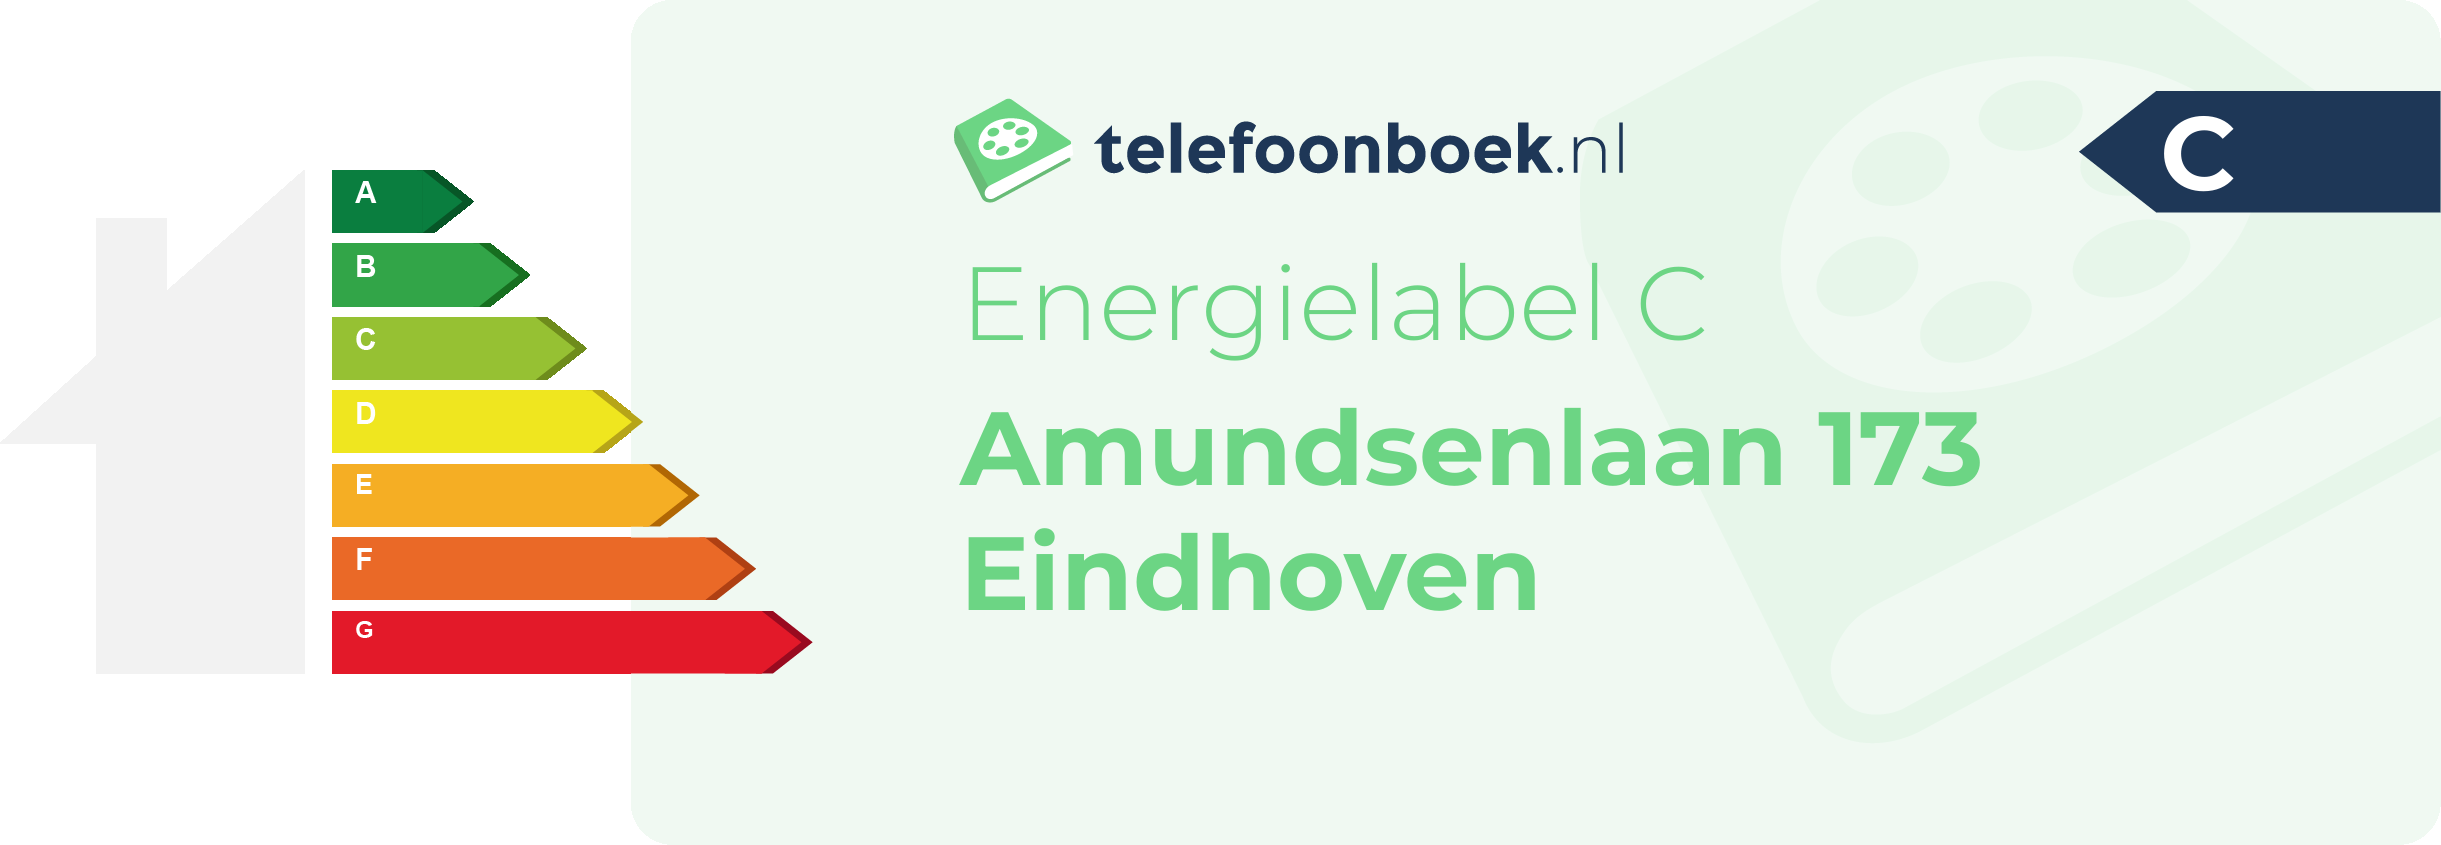 Energielabel Amundsenlaan 173 Eindhoven